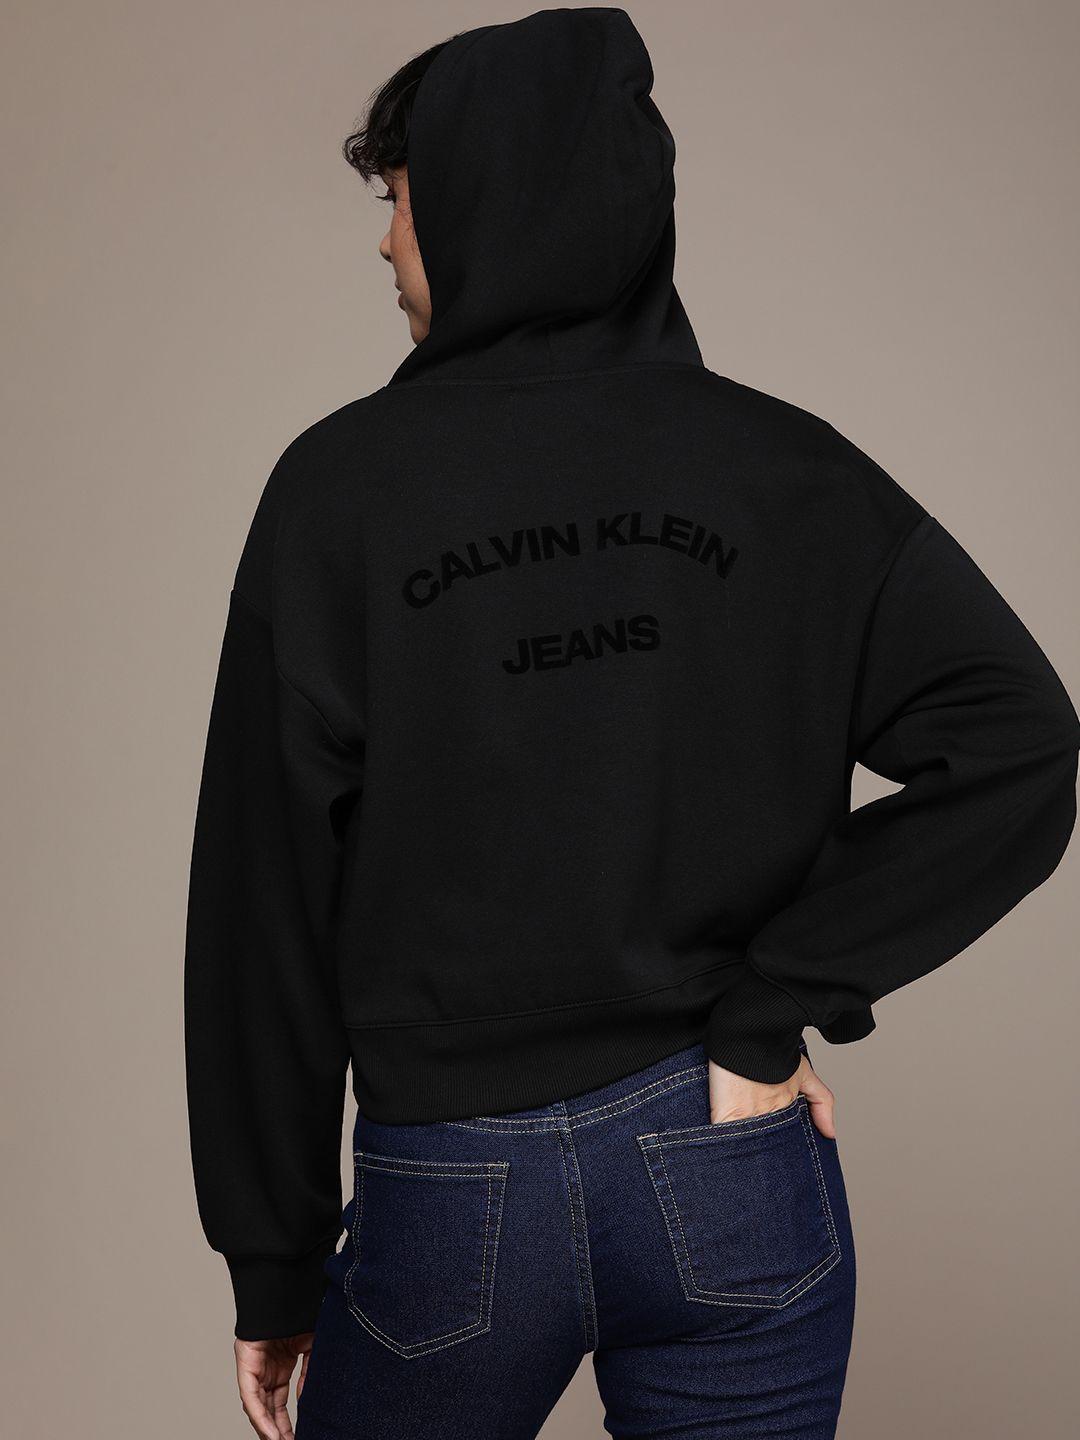 calvin klein jeans embroidered hooded sweatshirt